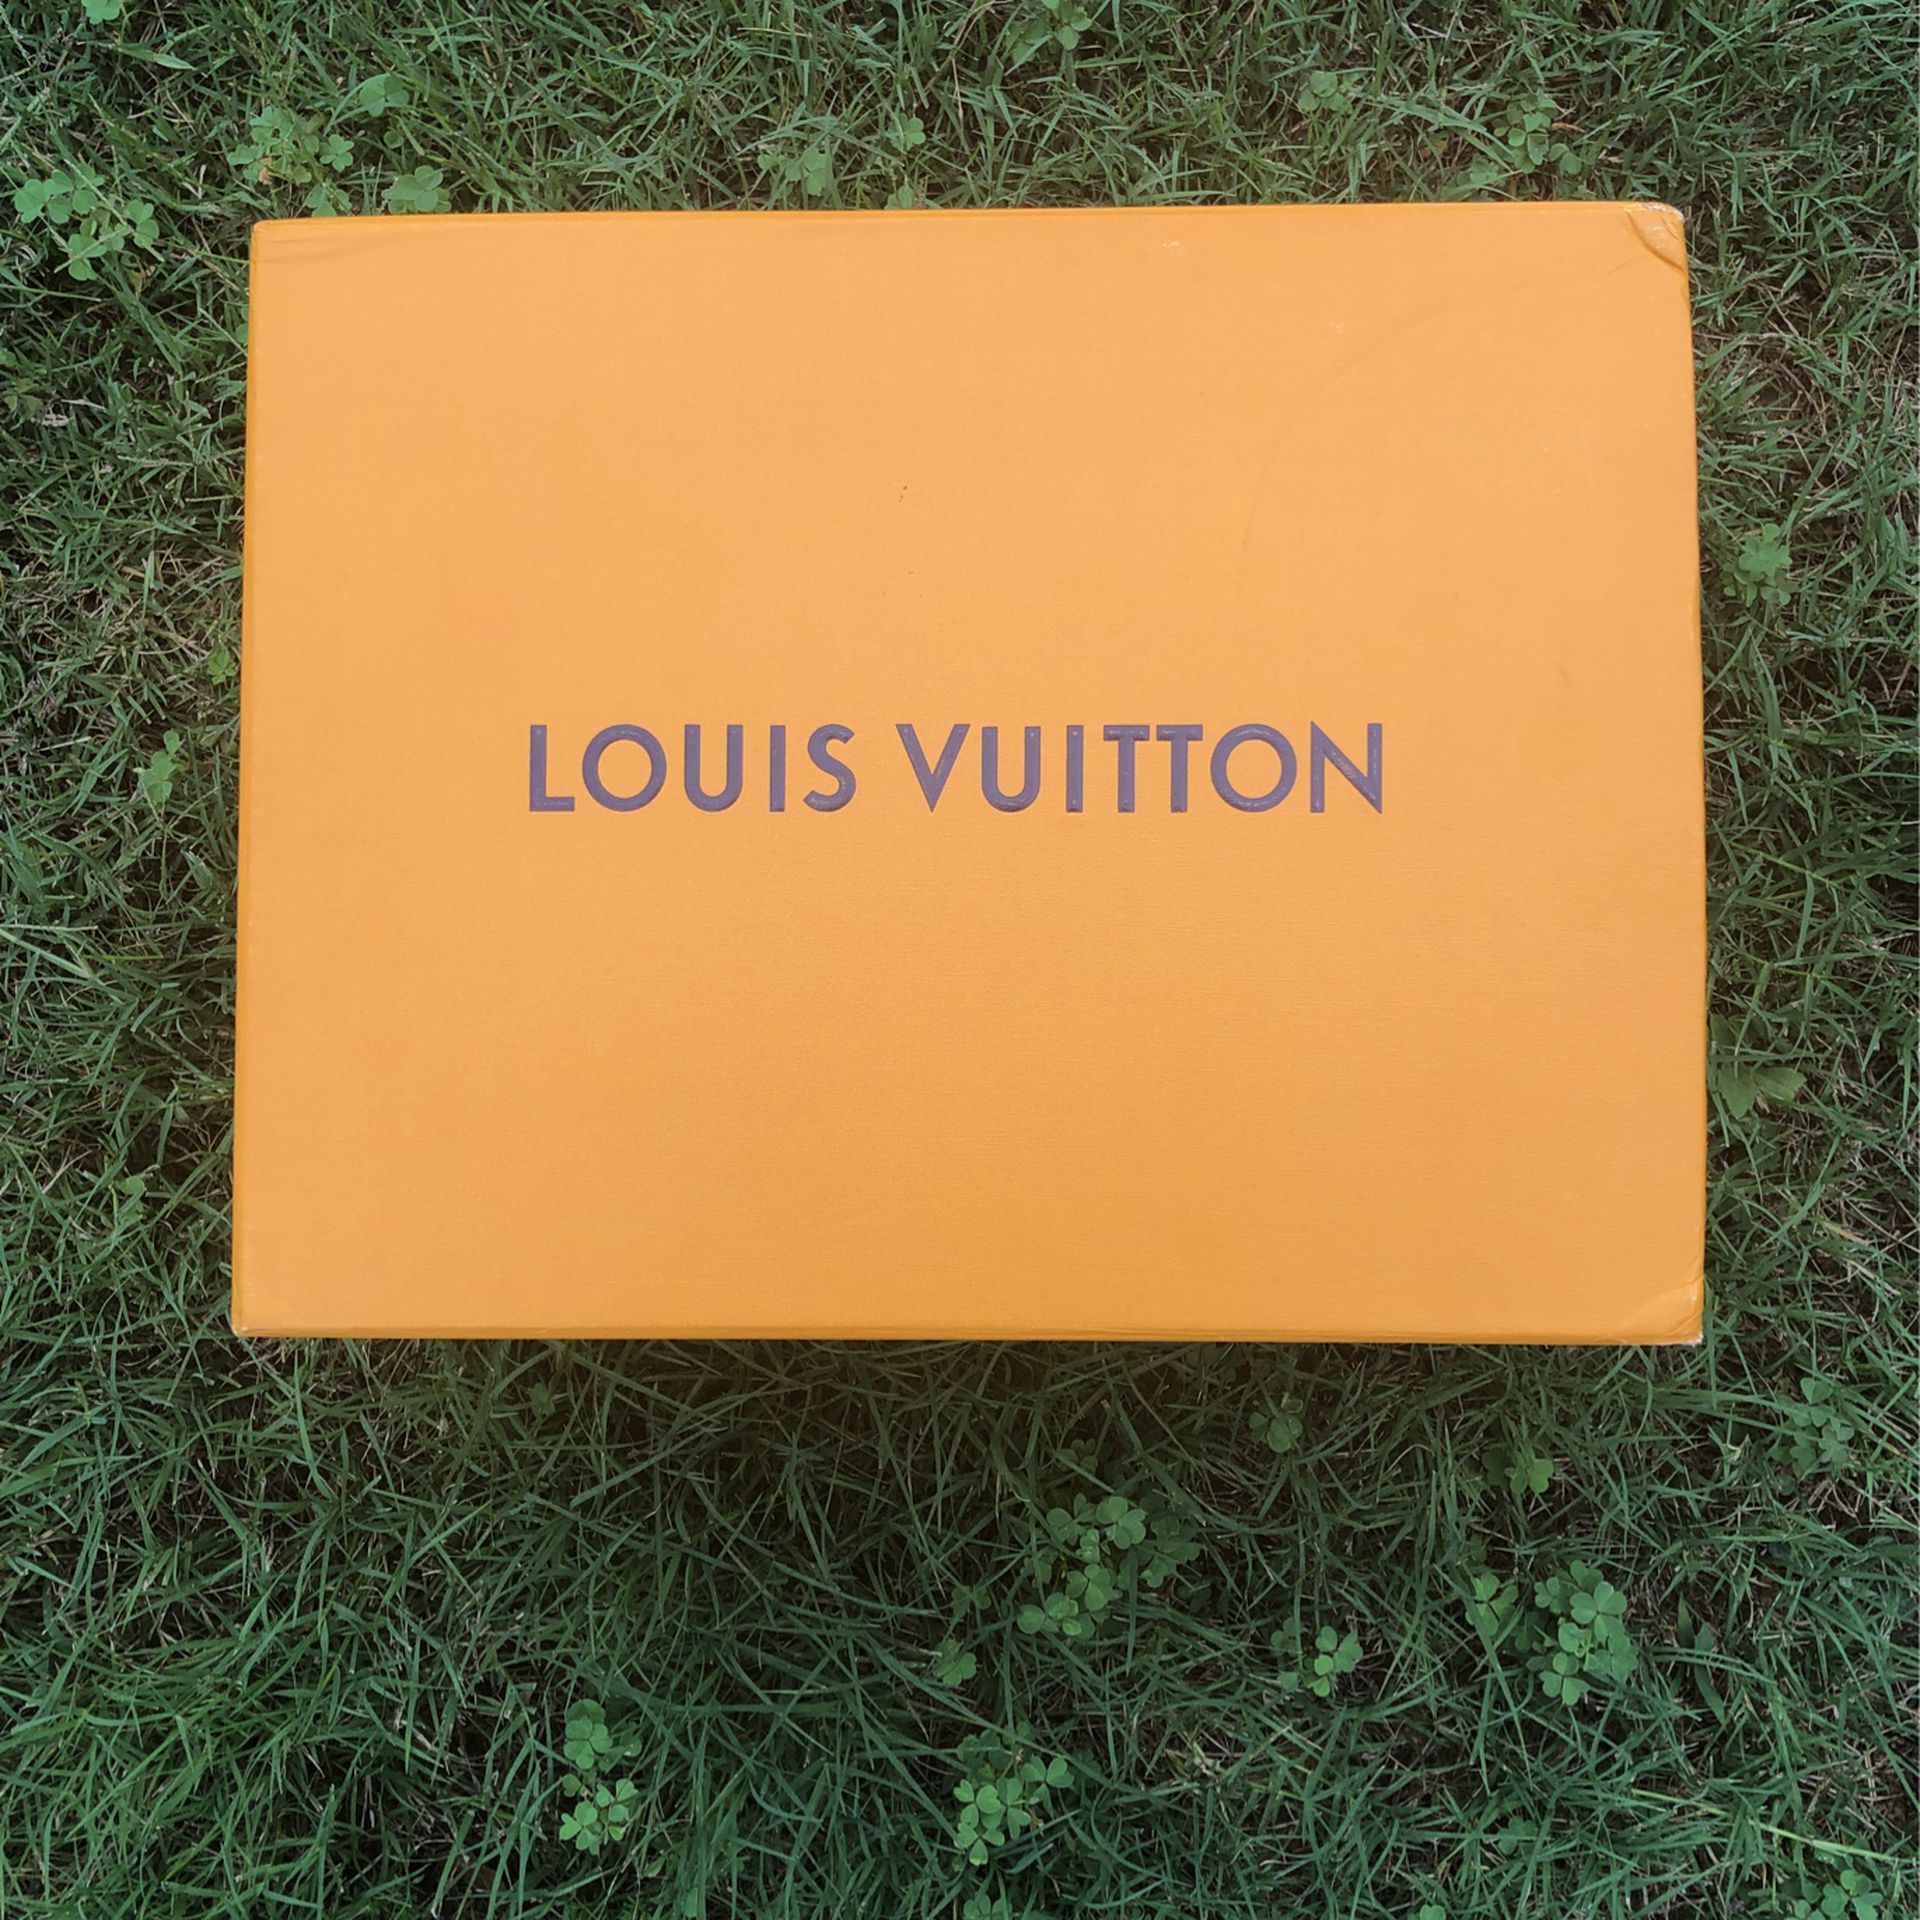 Louis Vuitton Articles DE Voyage Maison Fondee EN 1854 for Sale in Austell,  GA - OfferUp